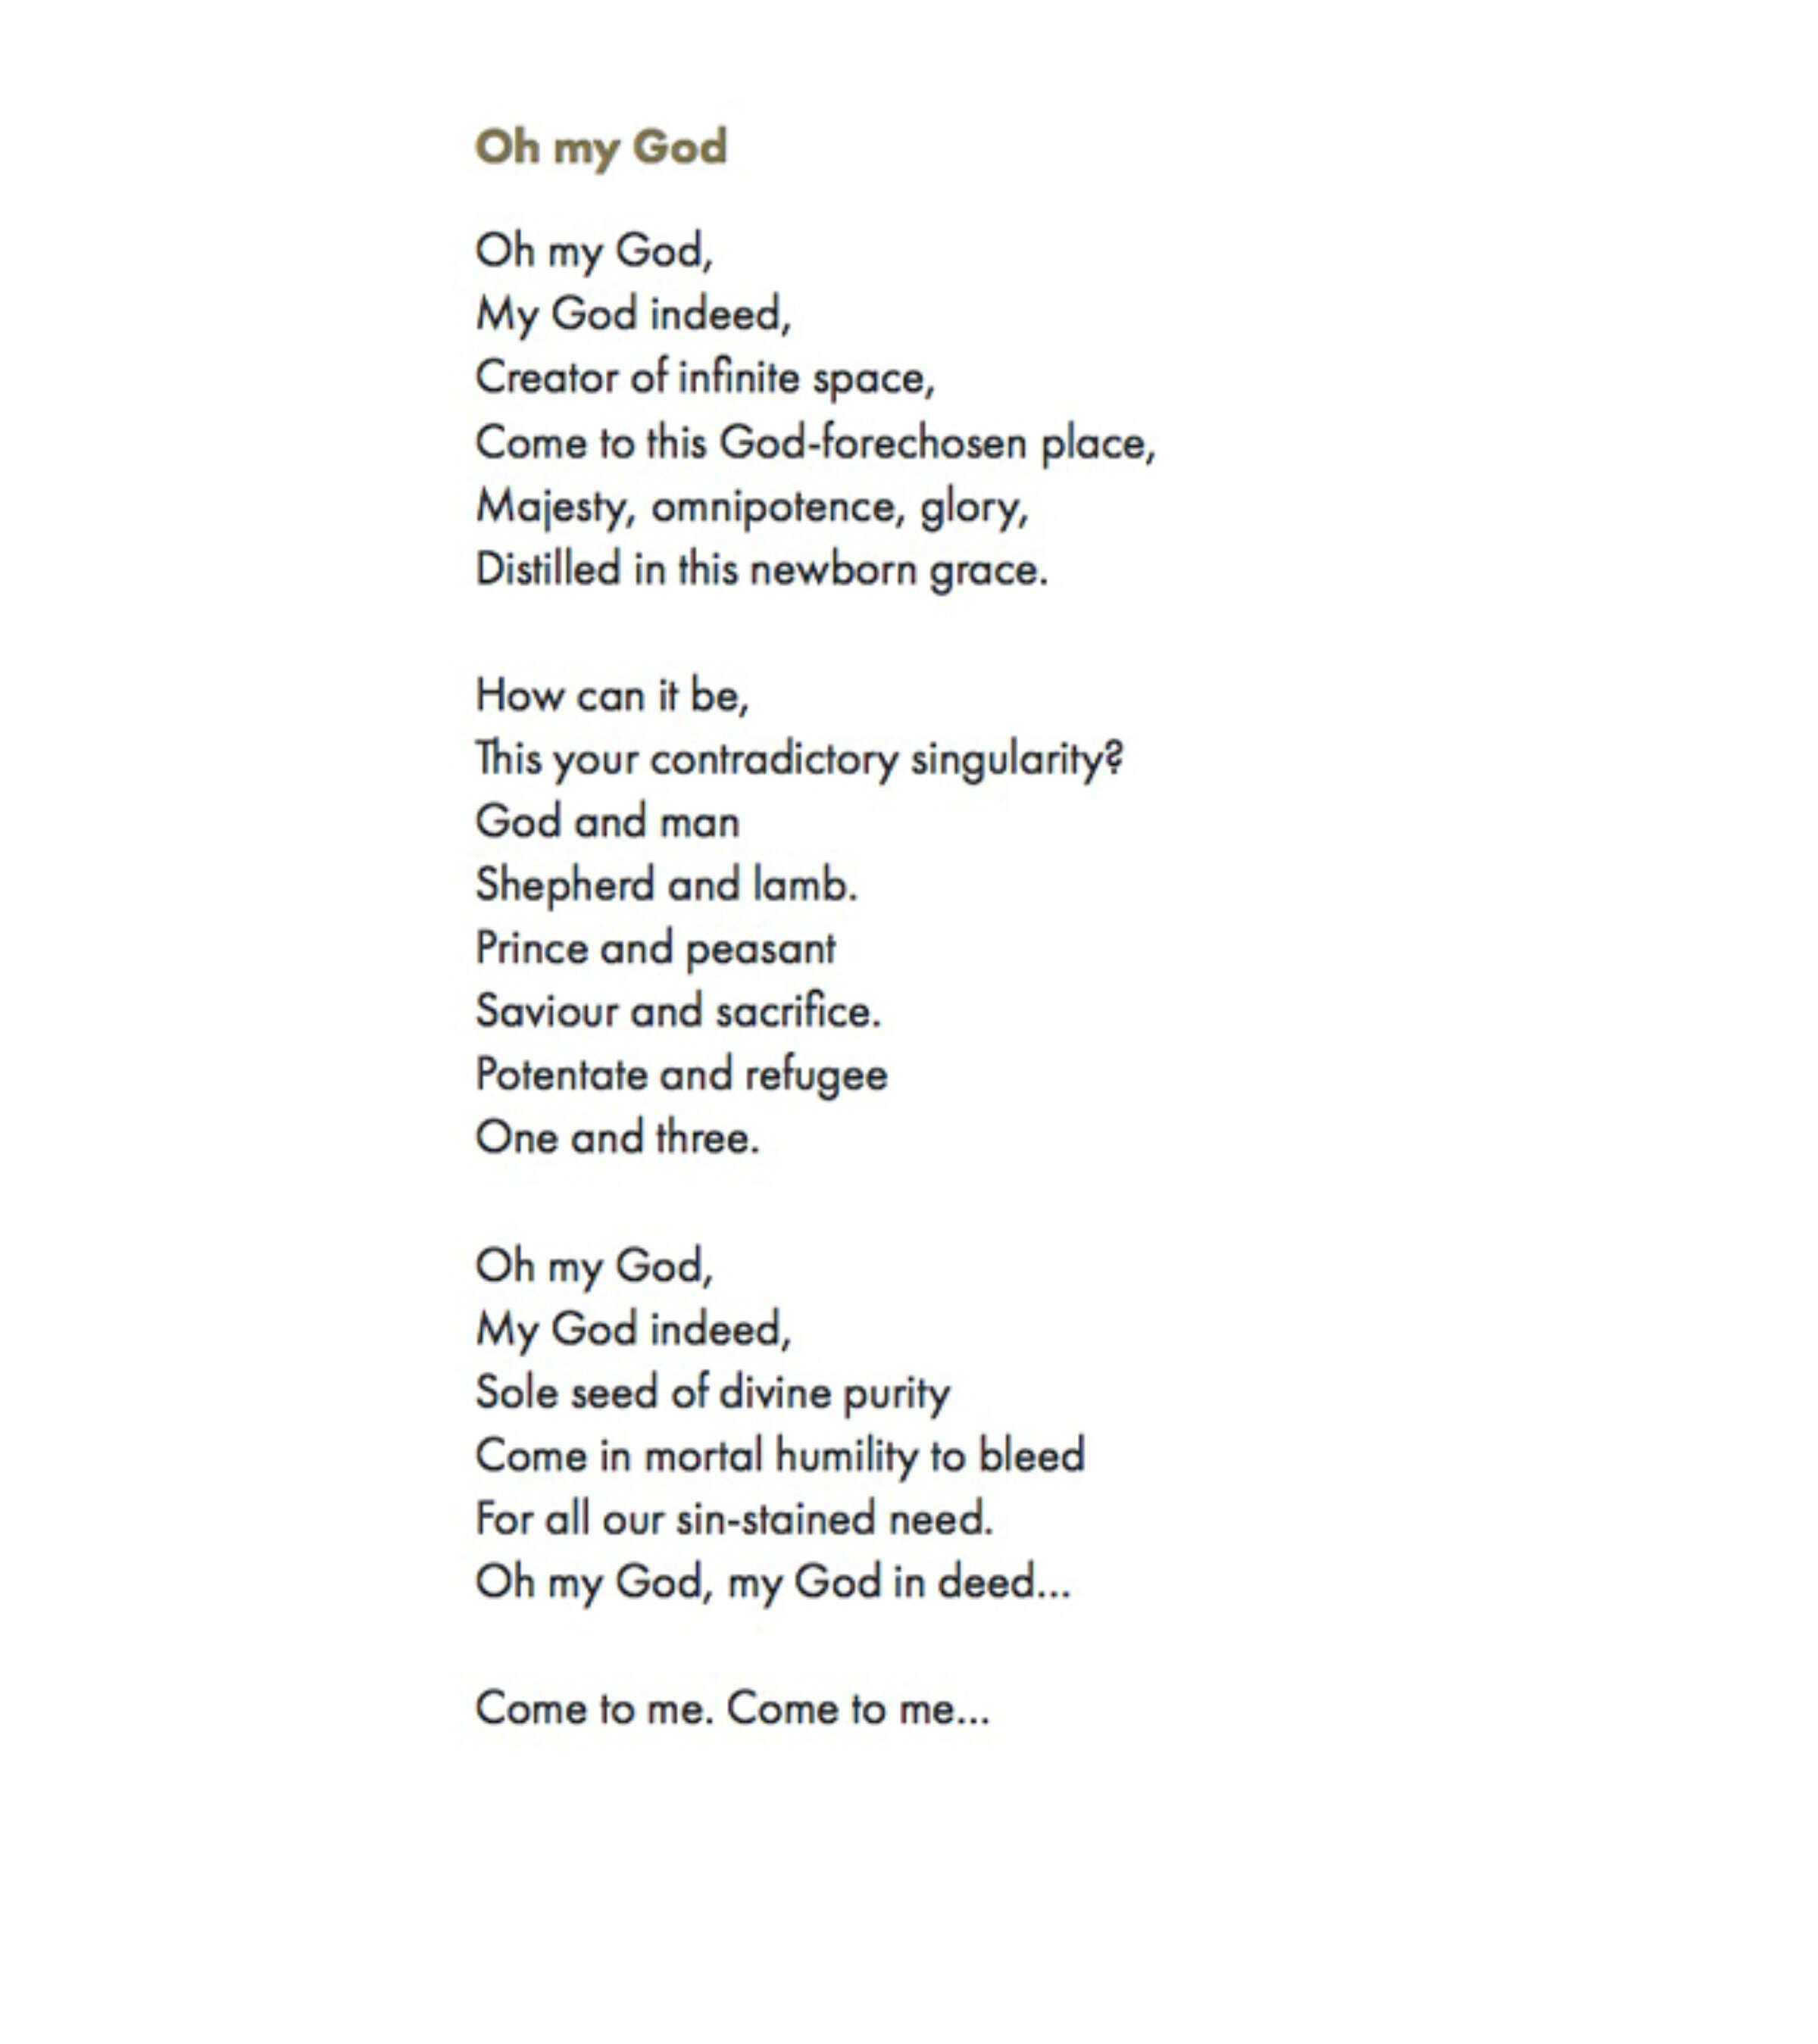 Christianity Advent week 4 - Oh my God poem